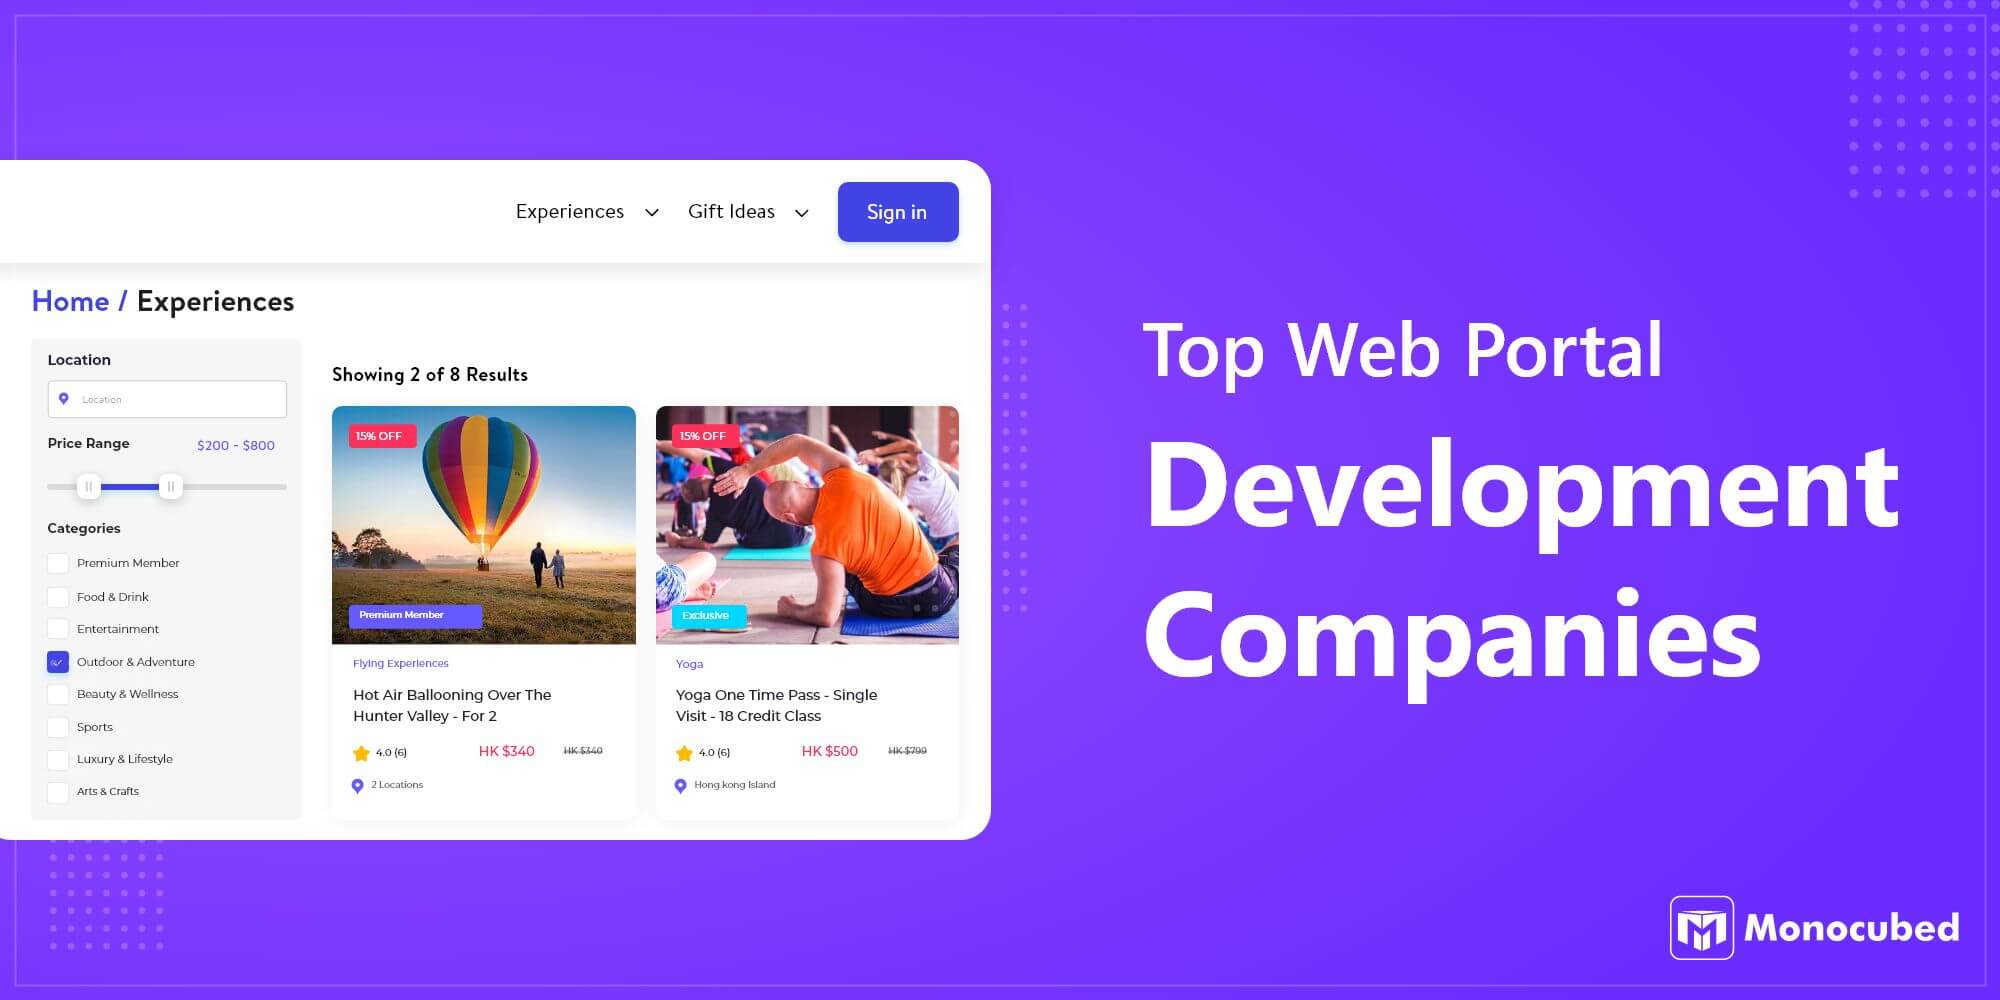 Top Web Portal Development Companies